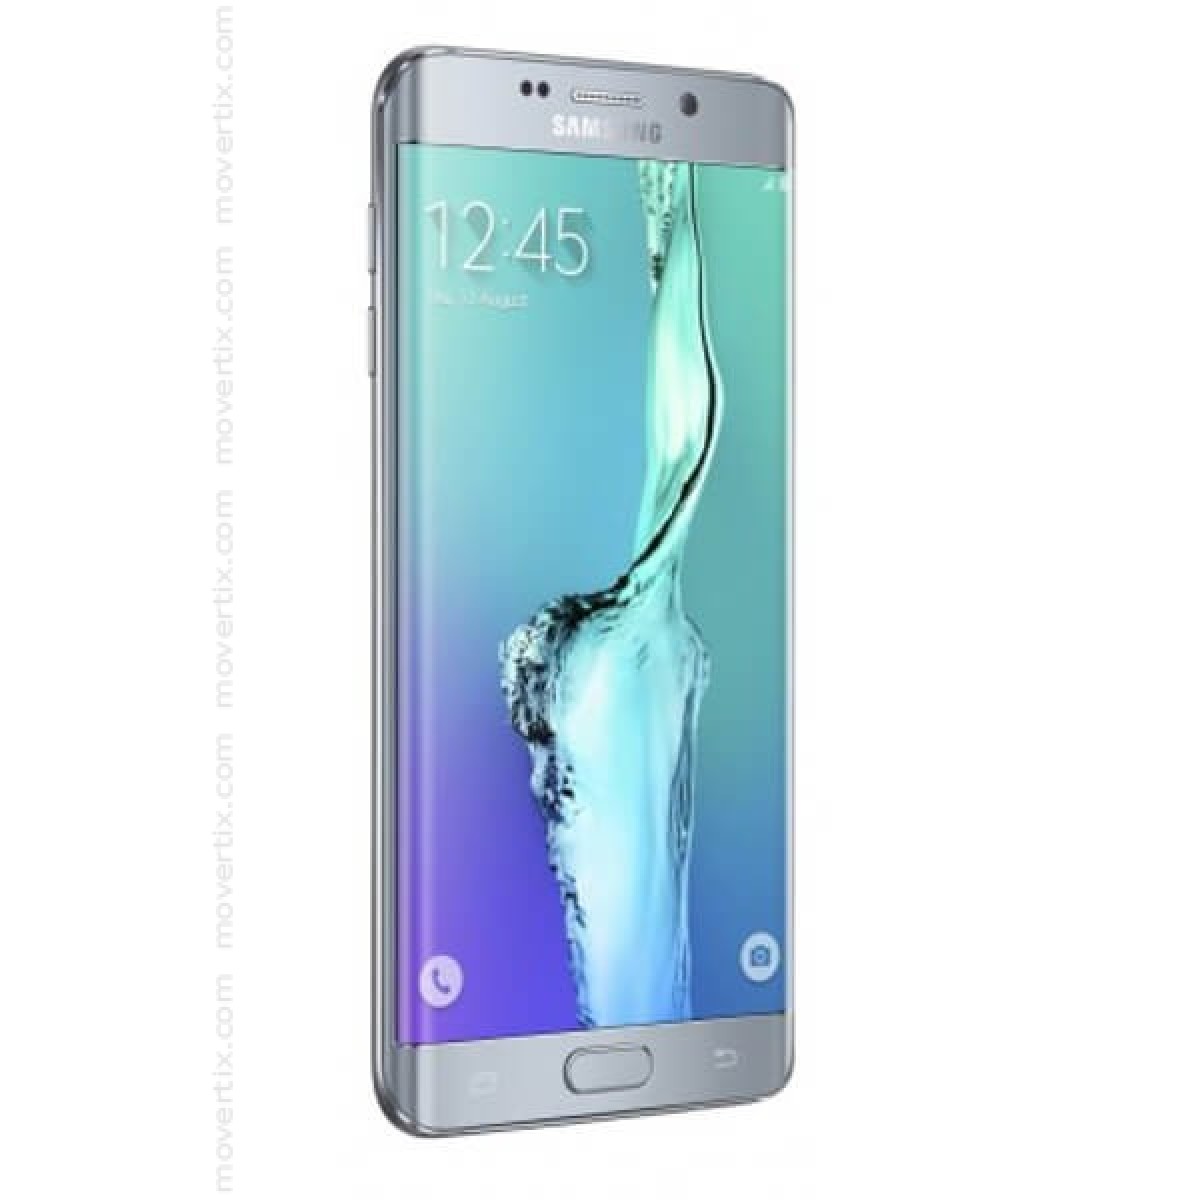 Samsung Galaxy S6 Edge Plus Silver 32GB - | Movertix Mobile Phones Shop